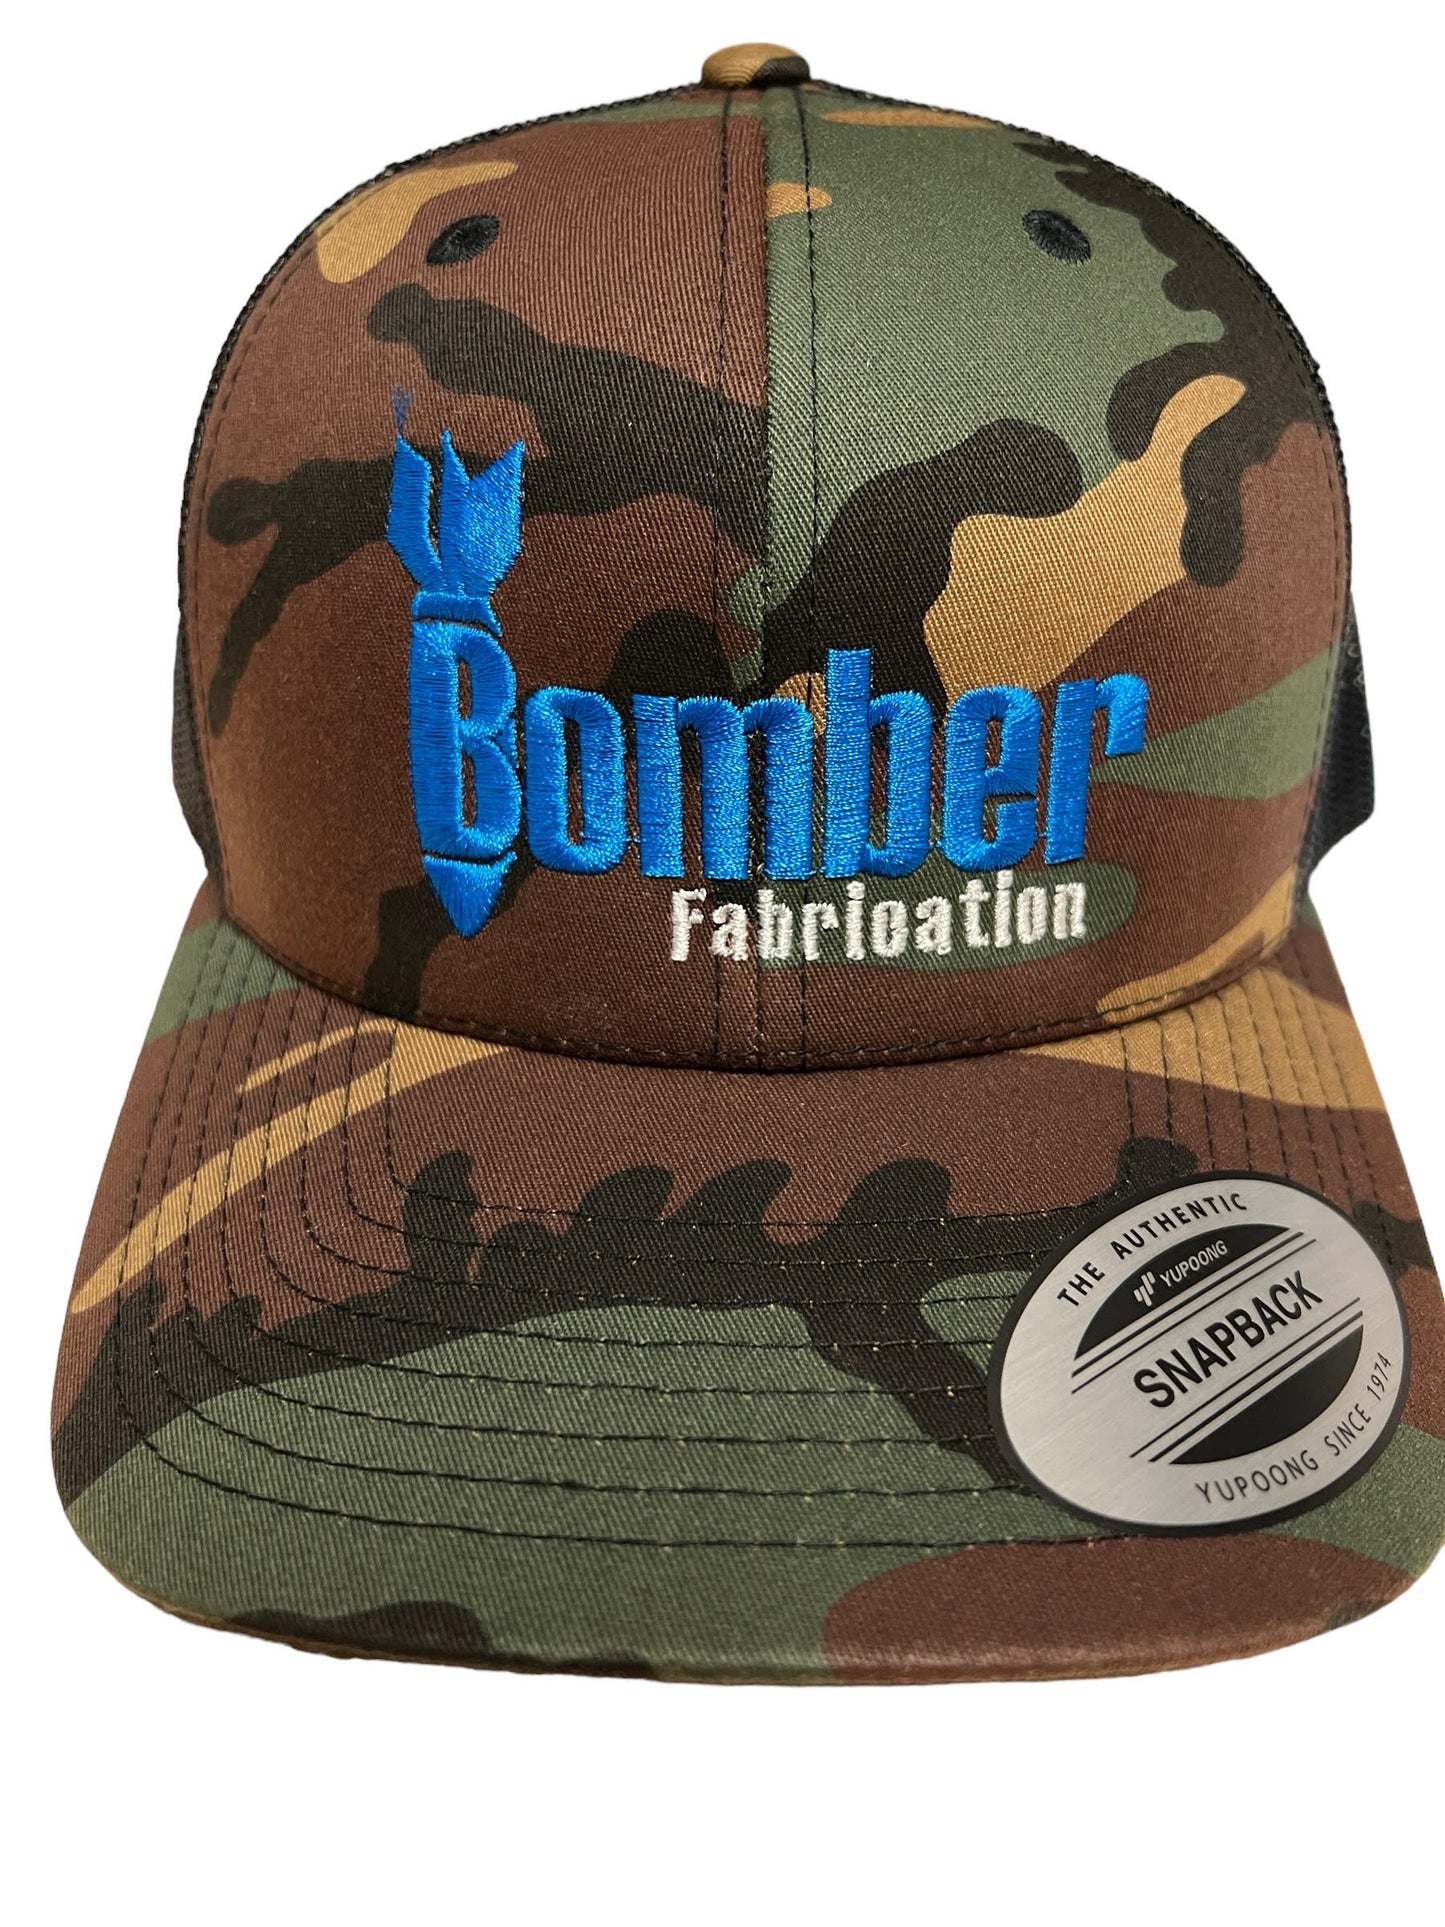 Bomber Fab Logo Trucker Hat